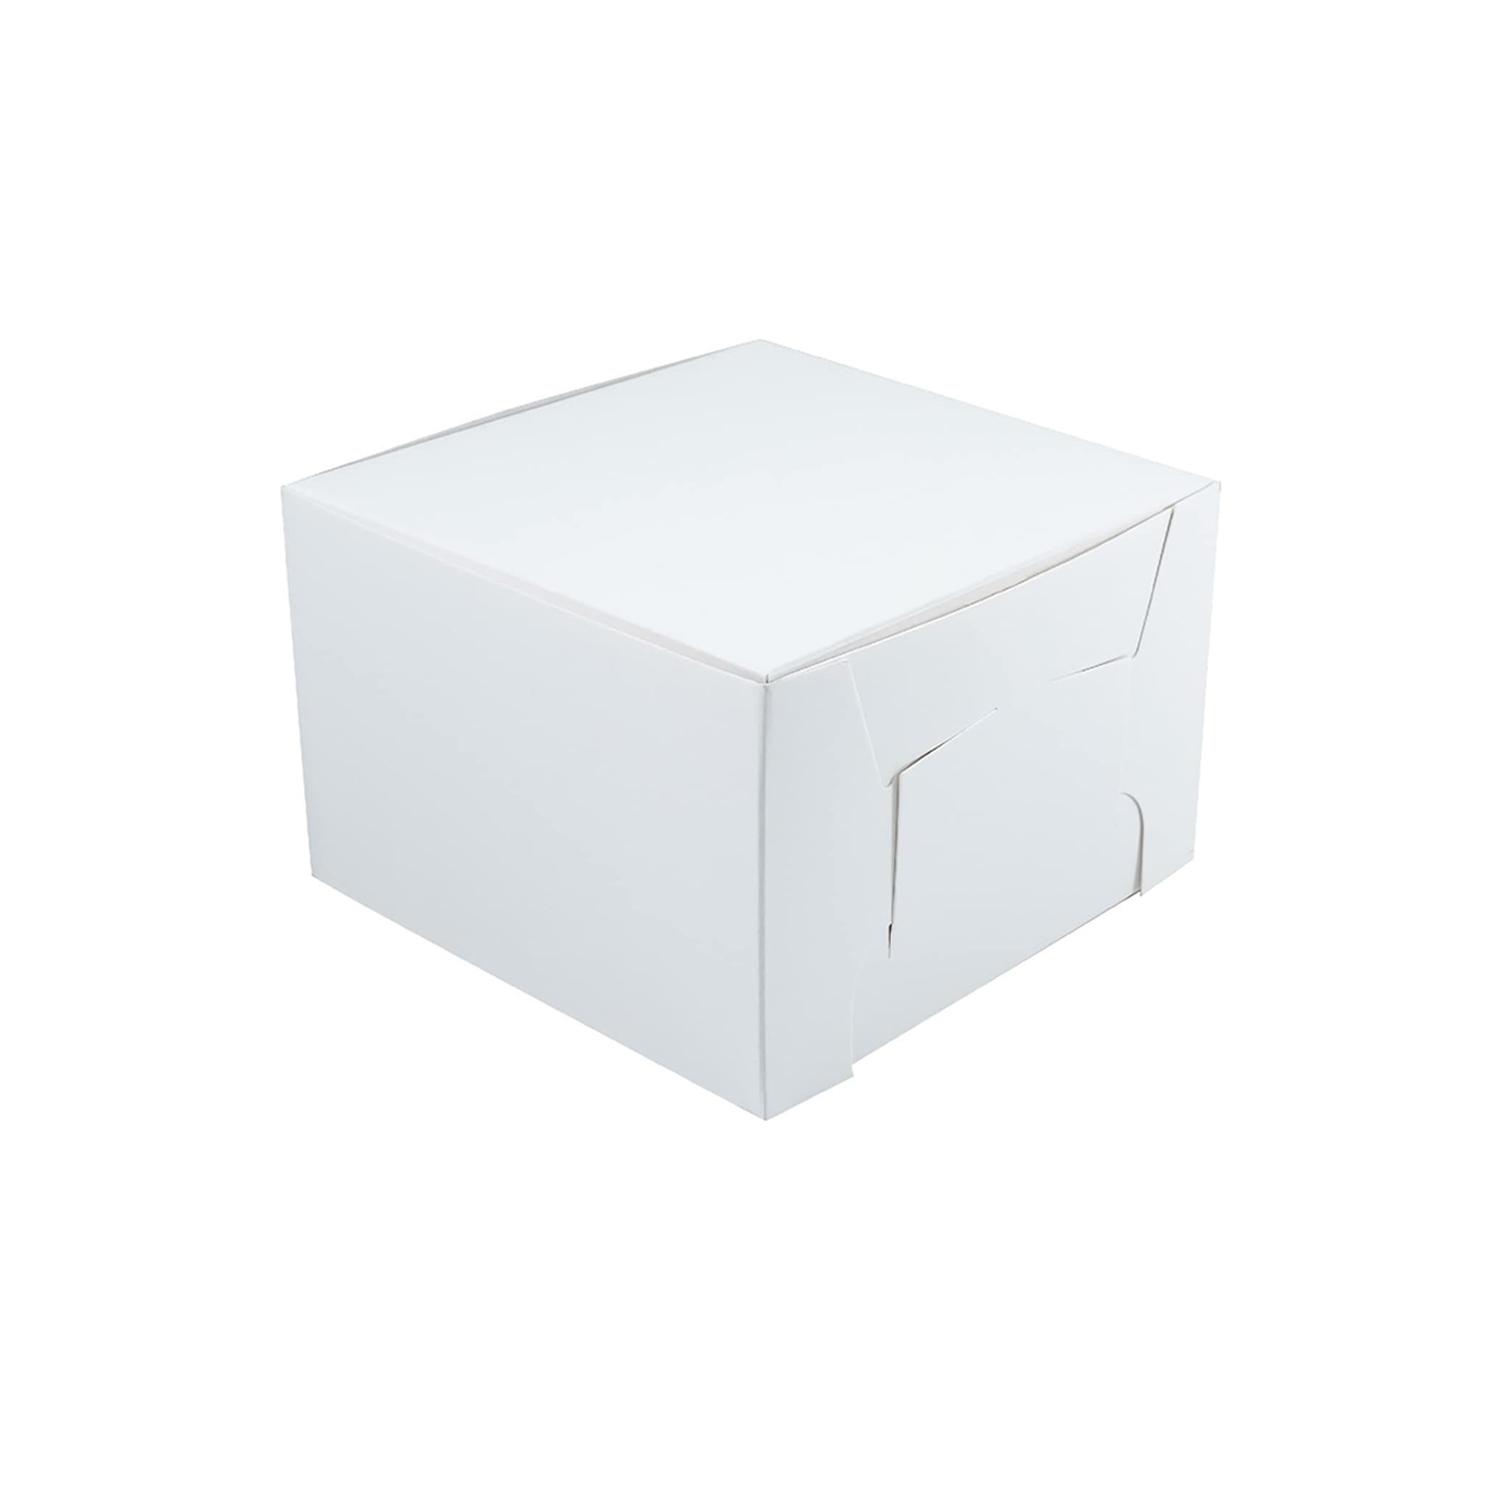 WHITE 10 X 10 X 4 INCHES CAKE BOX